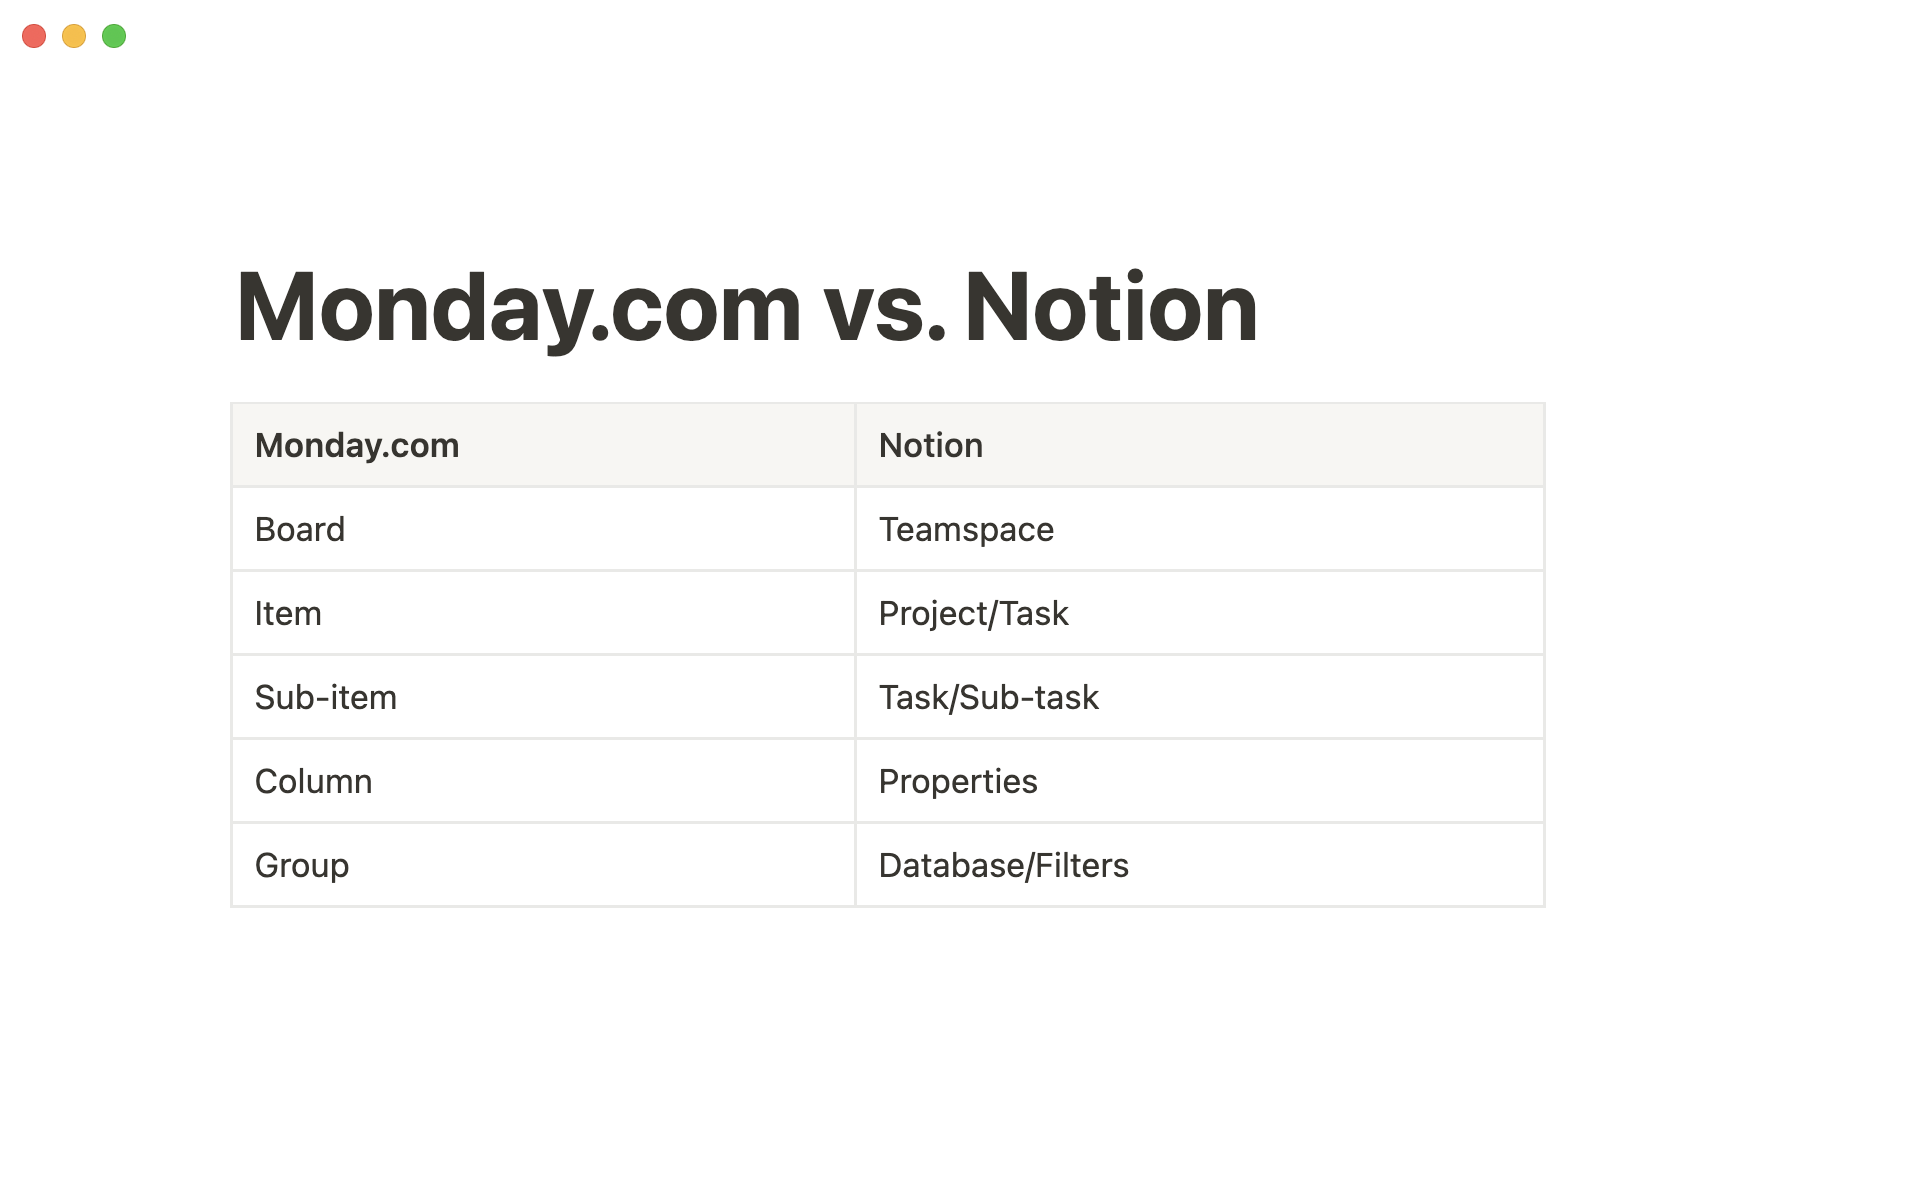 Here's how Monday.com translates into Notion.